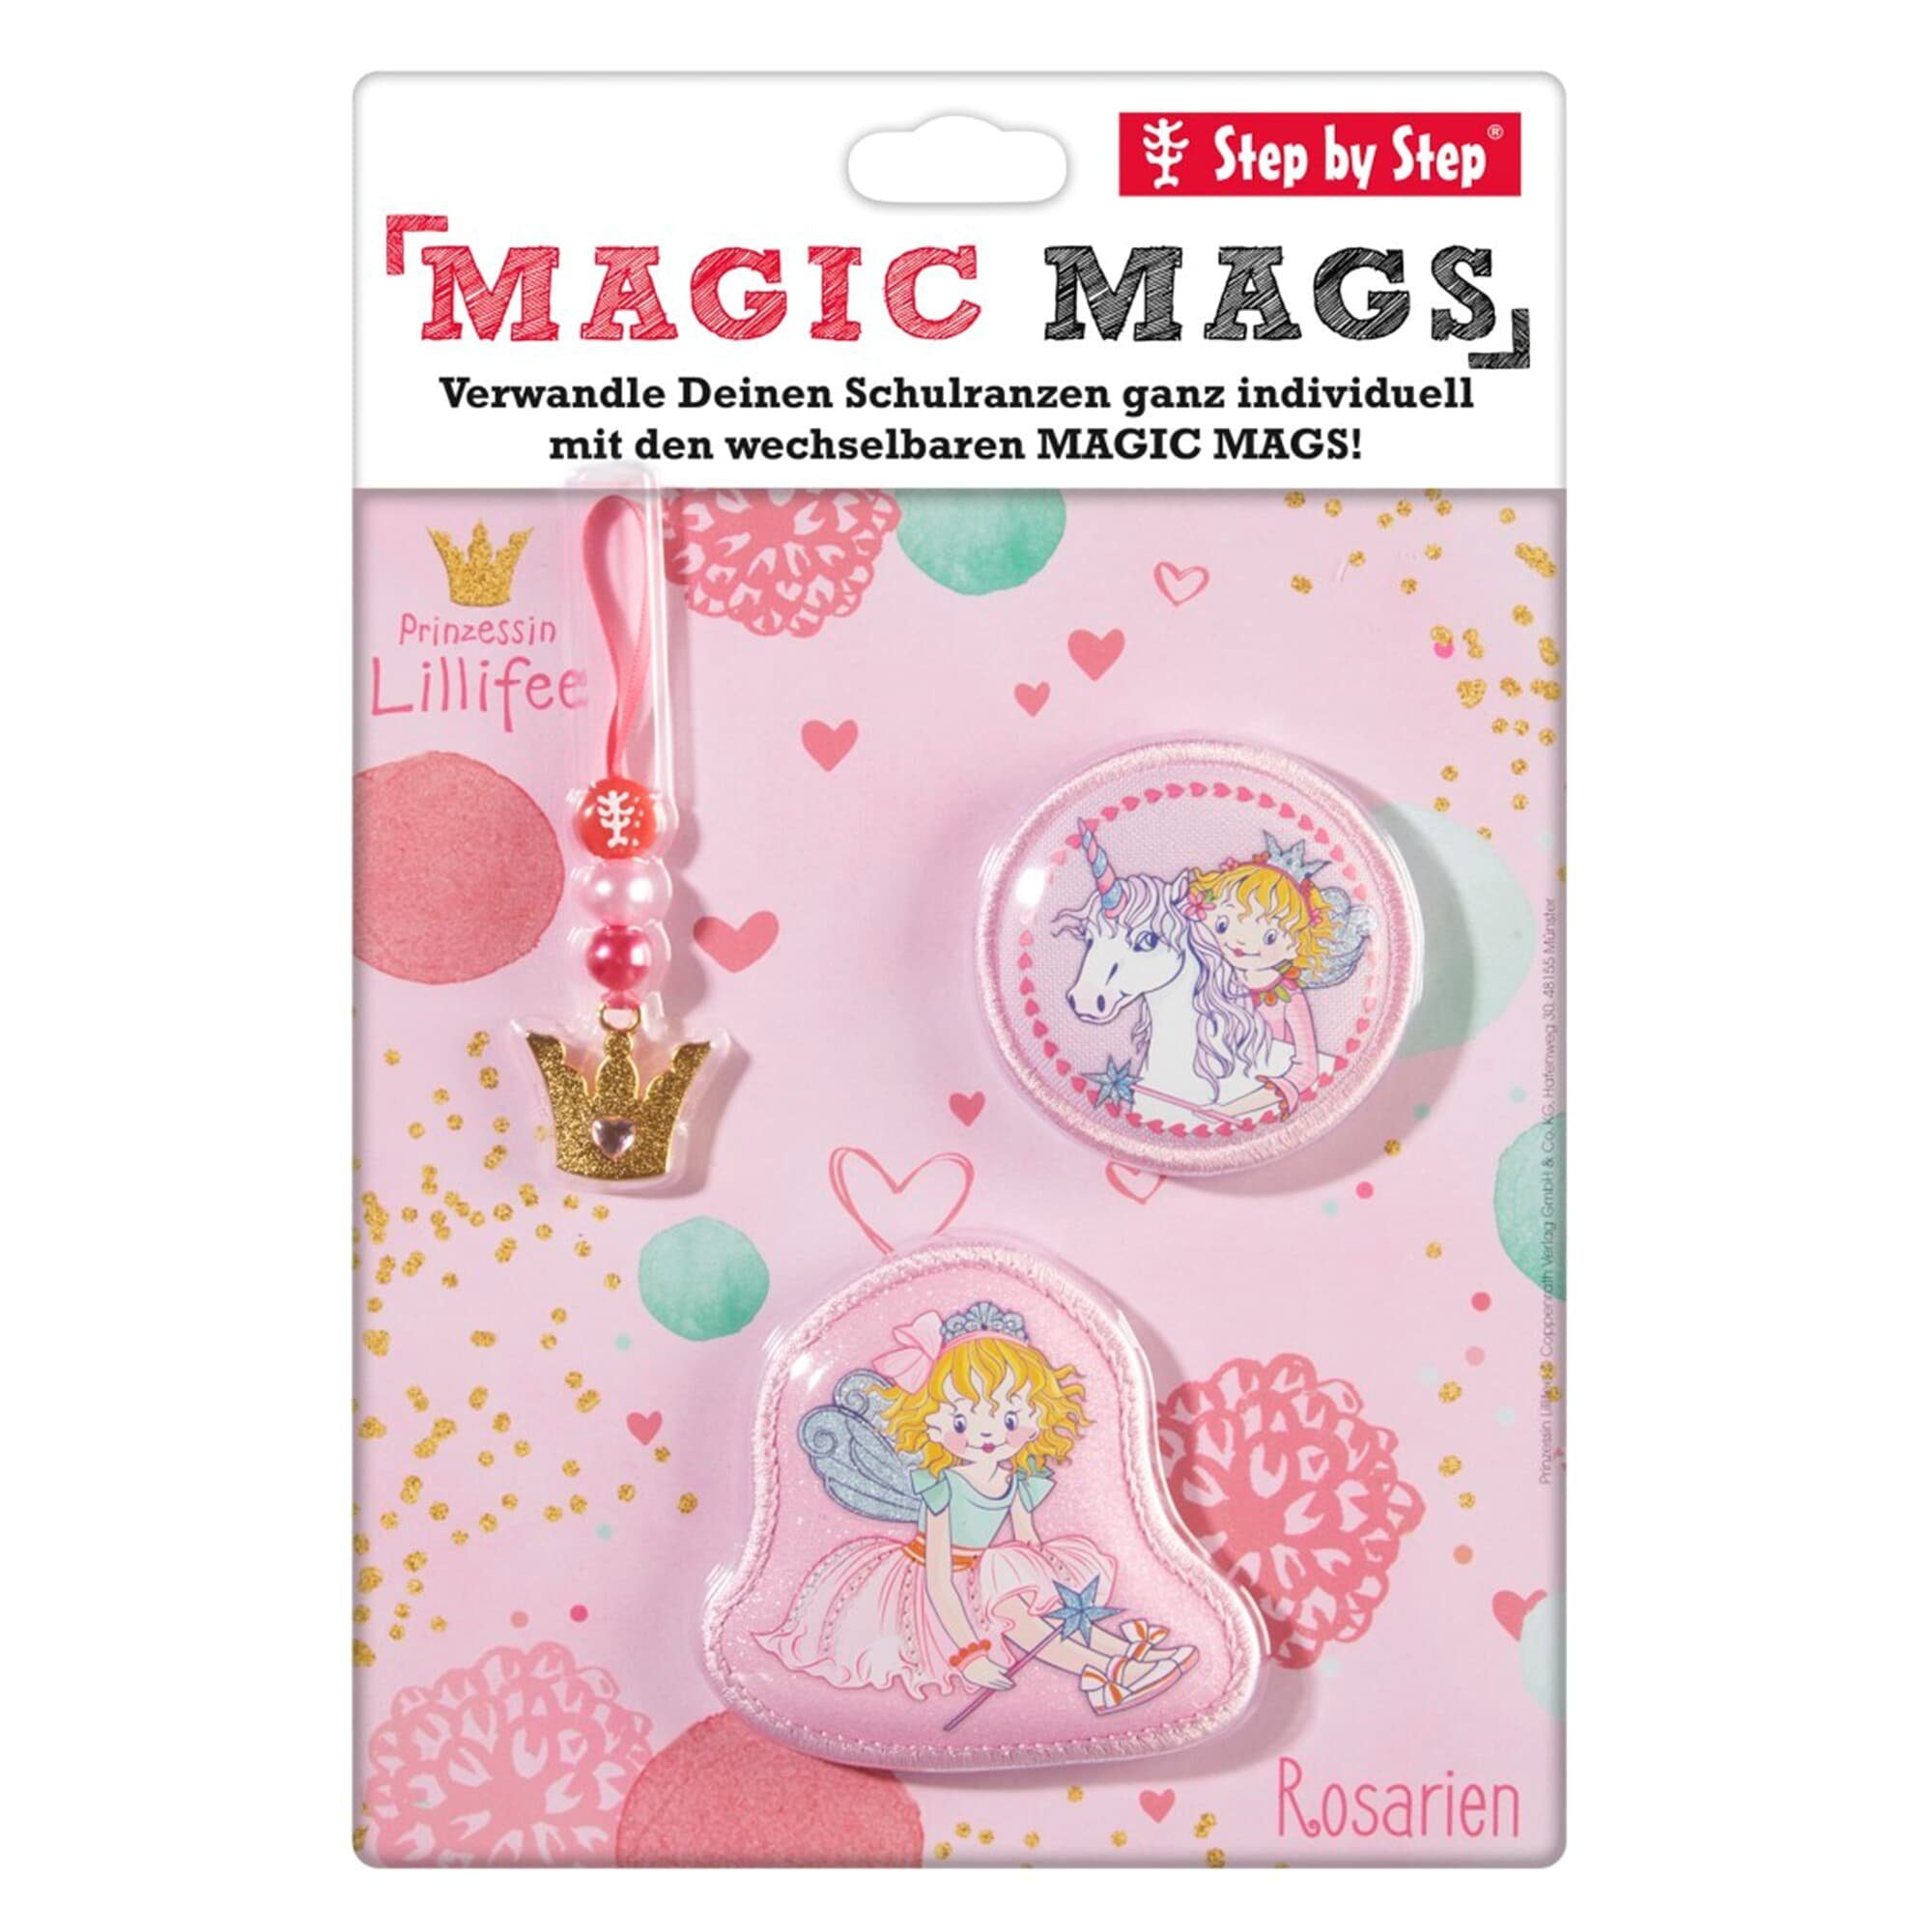 Step by Step Schulranzen MAGIC MAGS Prinzessin Lillifee, Rosarien